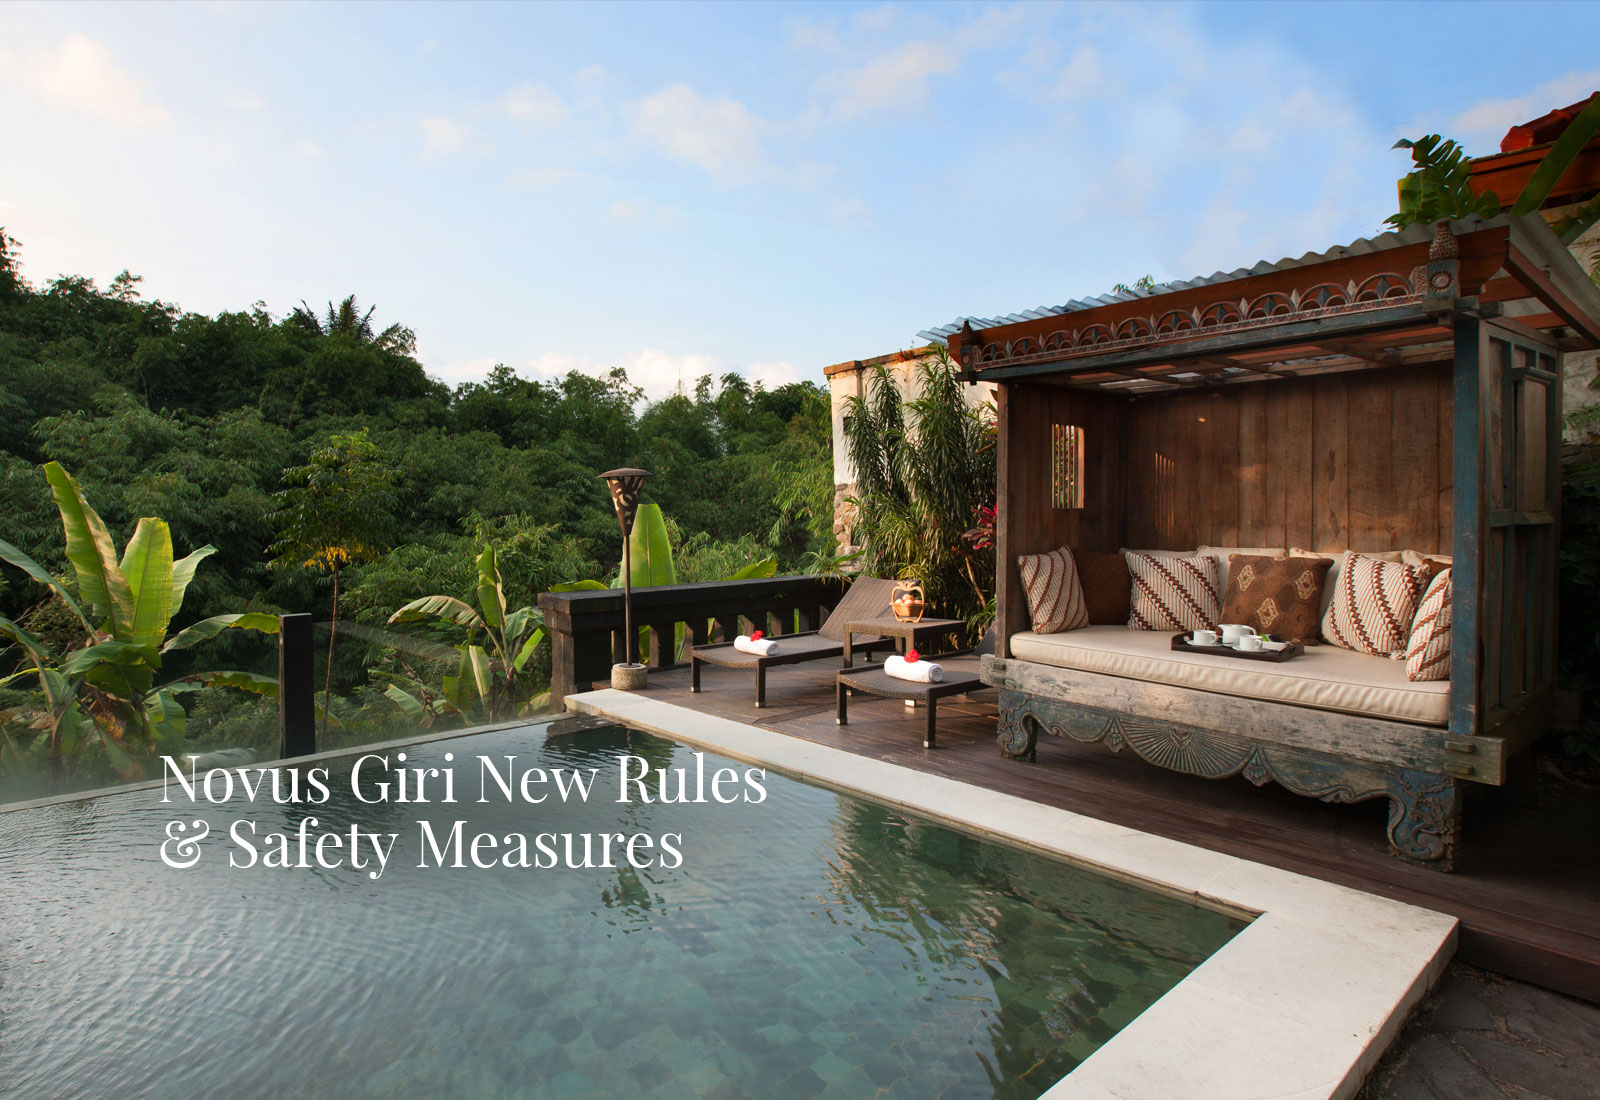 Novus Giri New rules & Safety Measures 